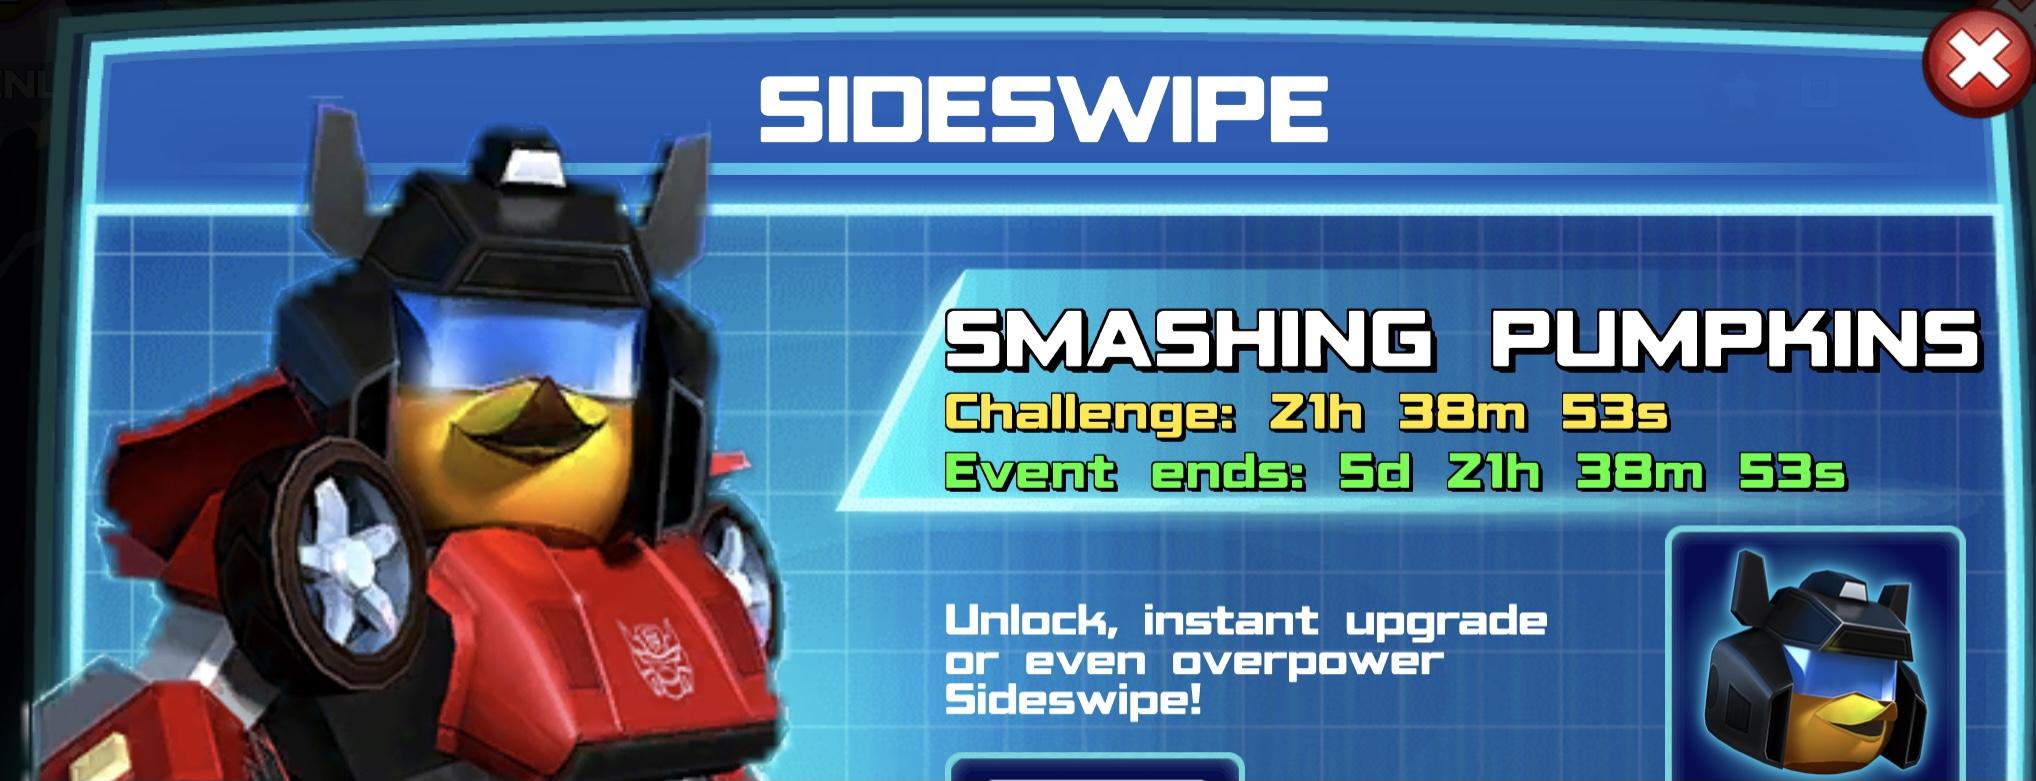 The event banner for Sideswipe – Smashing Pumpkins